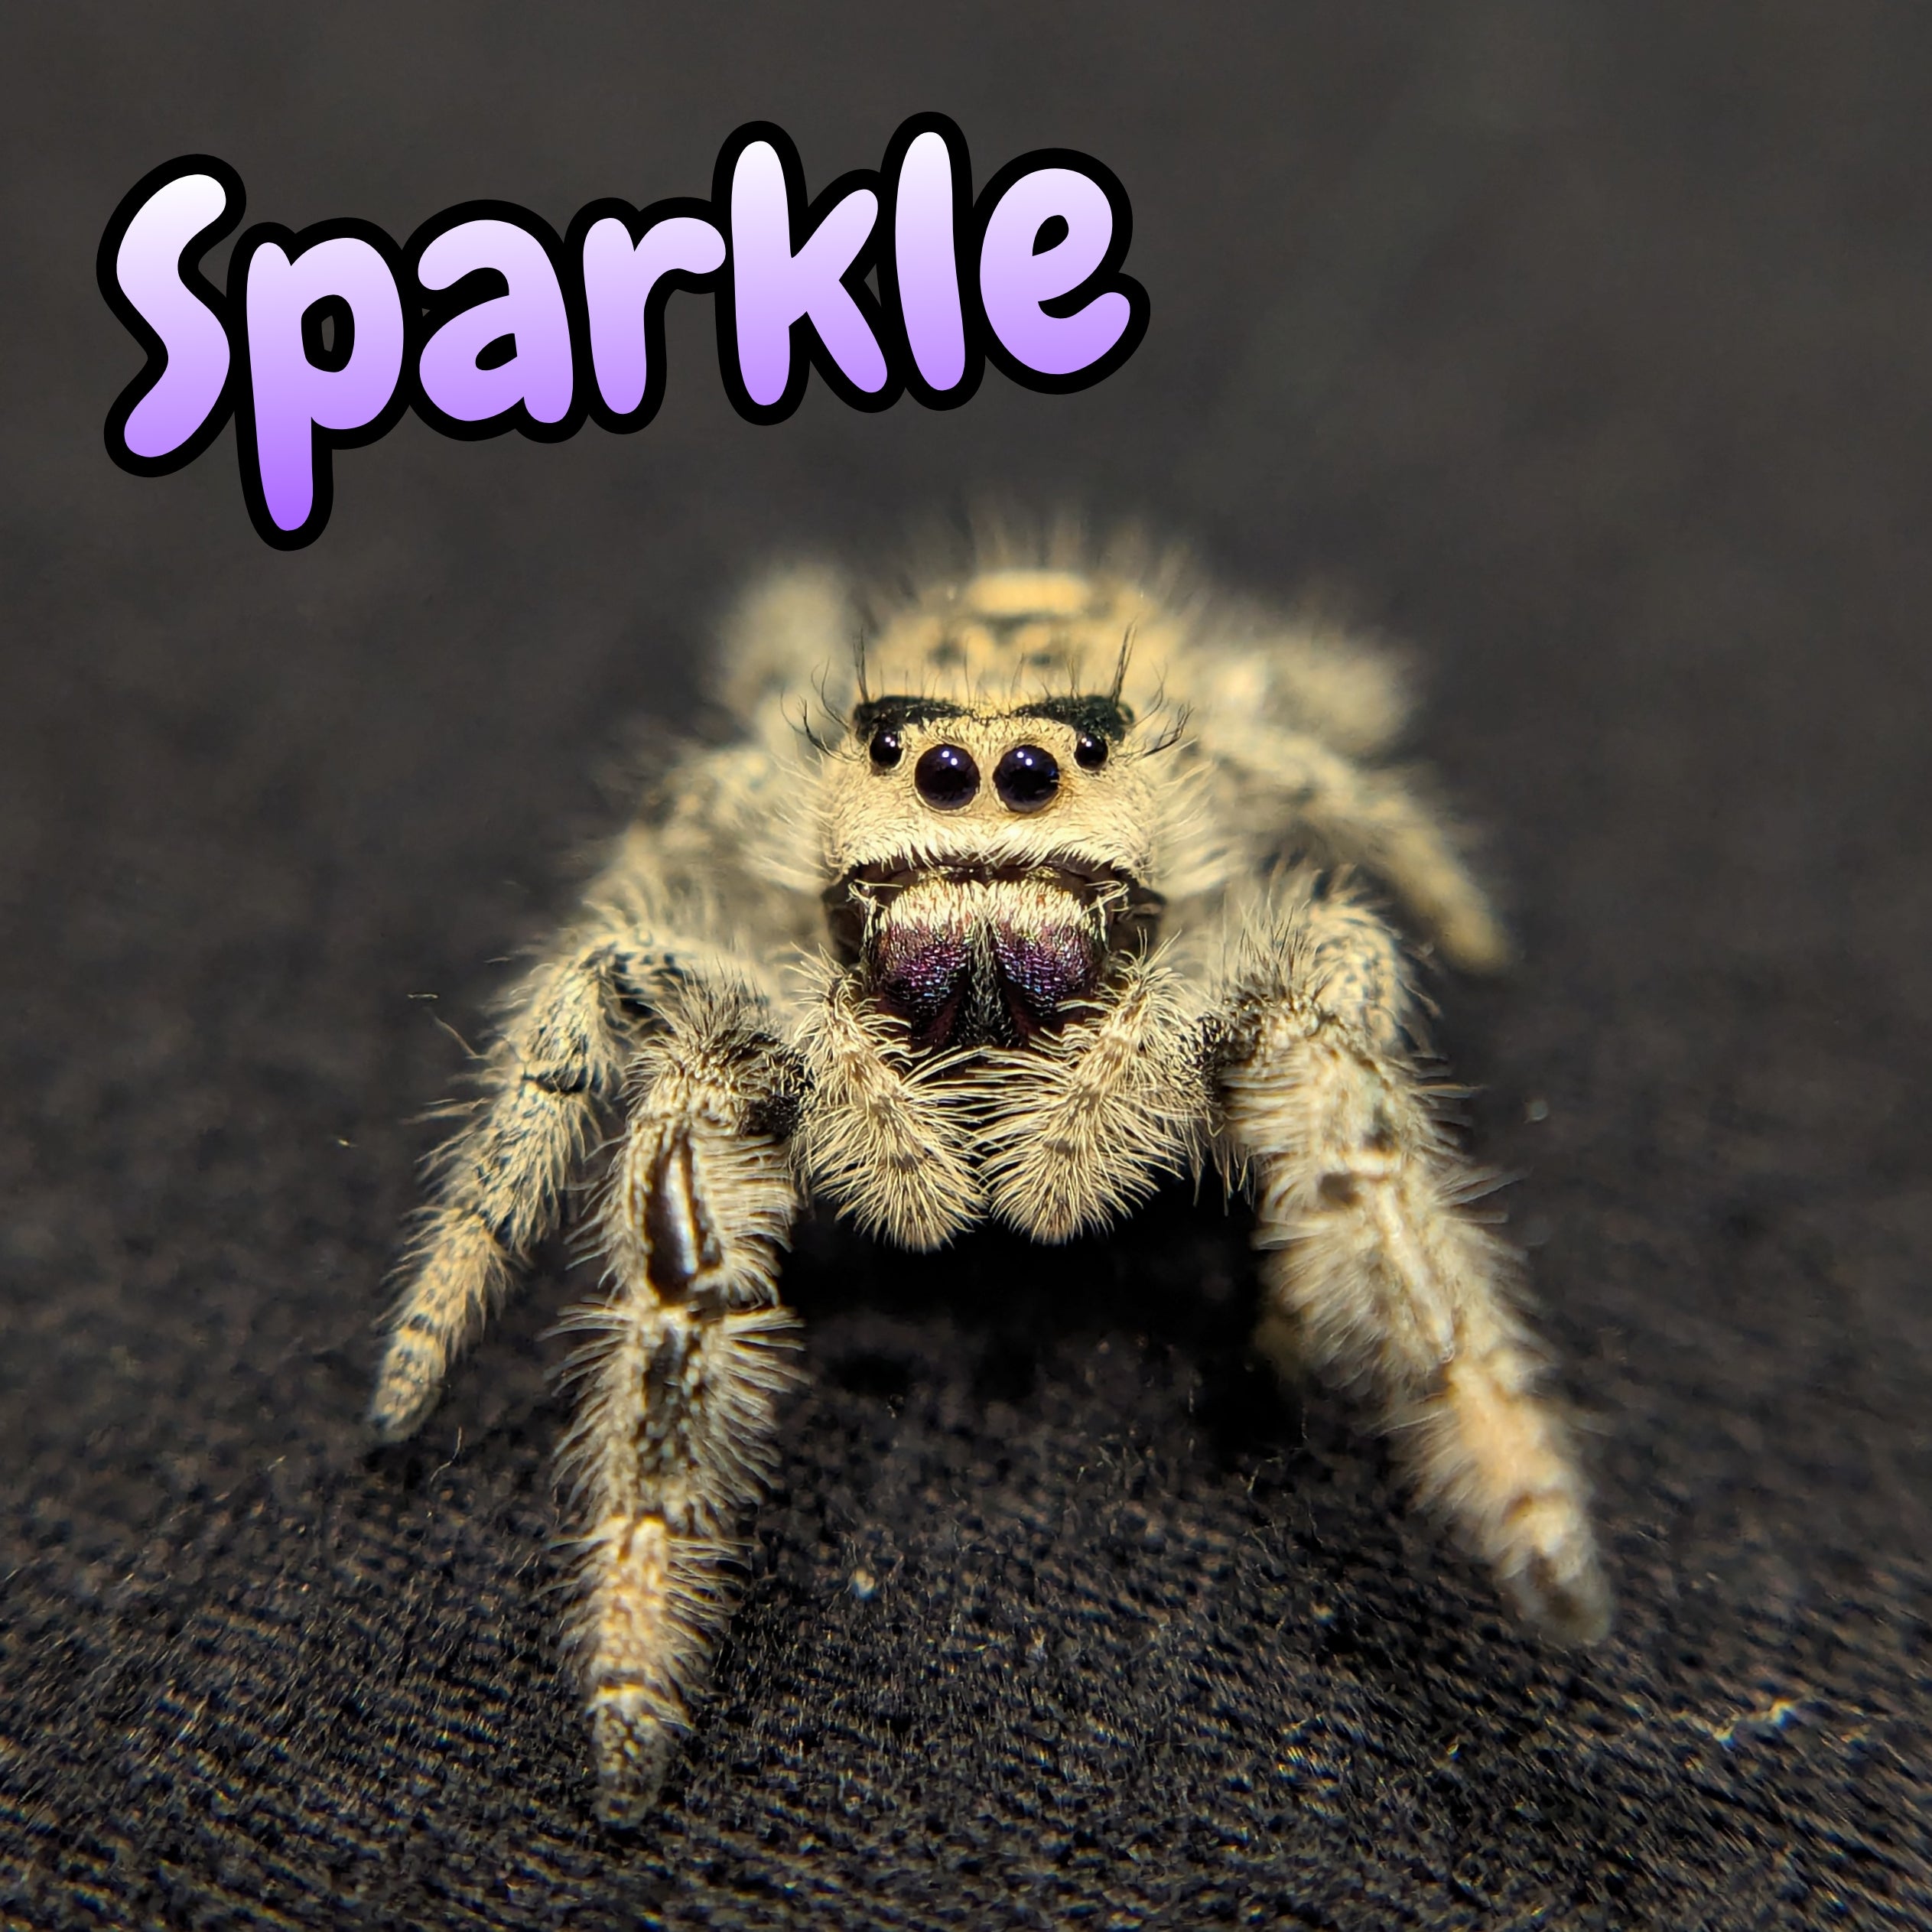 Regal Jumping Spider "Sparkle"